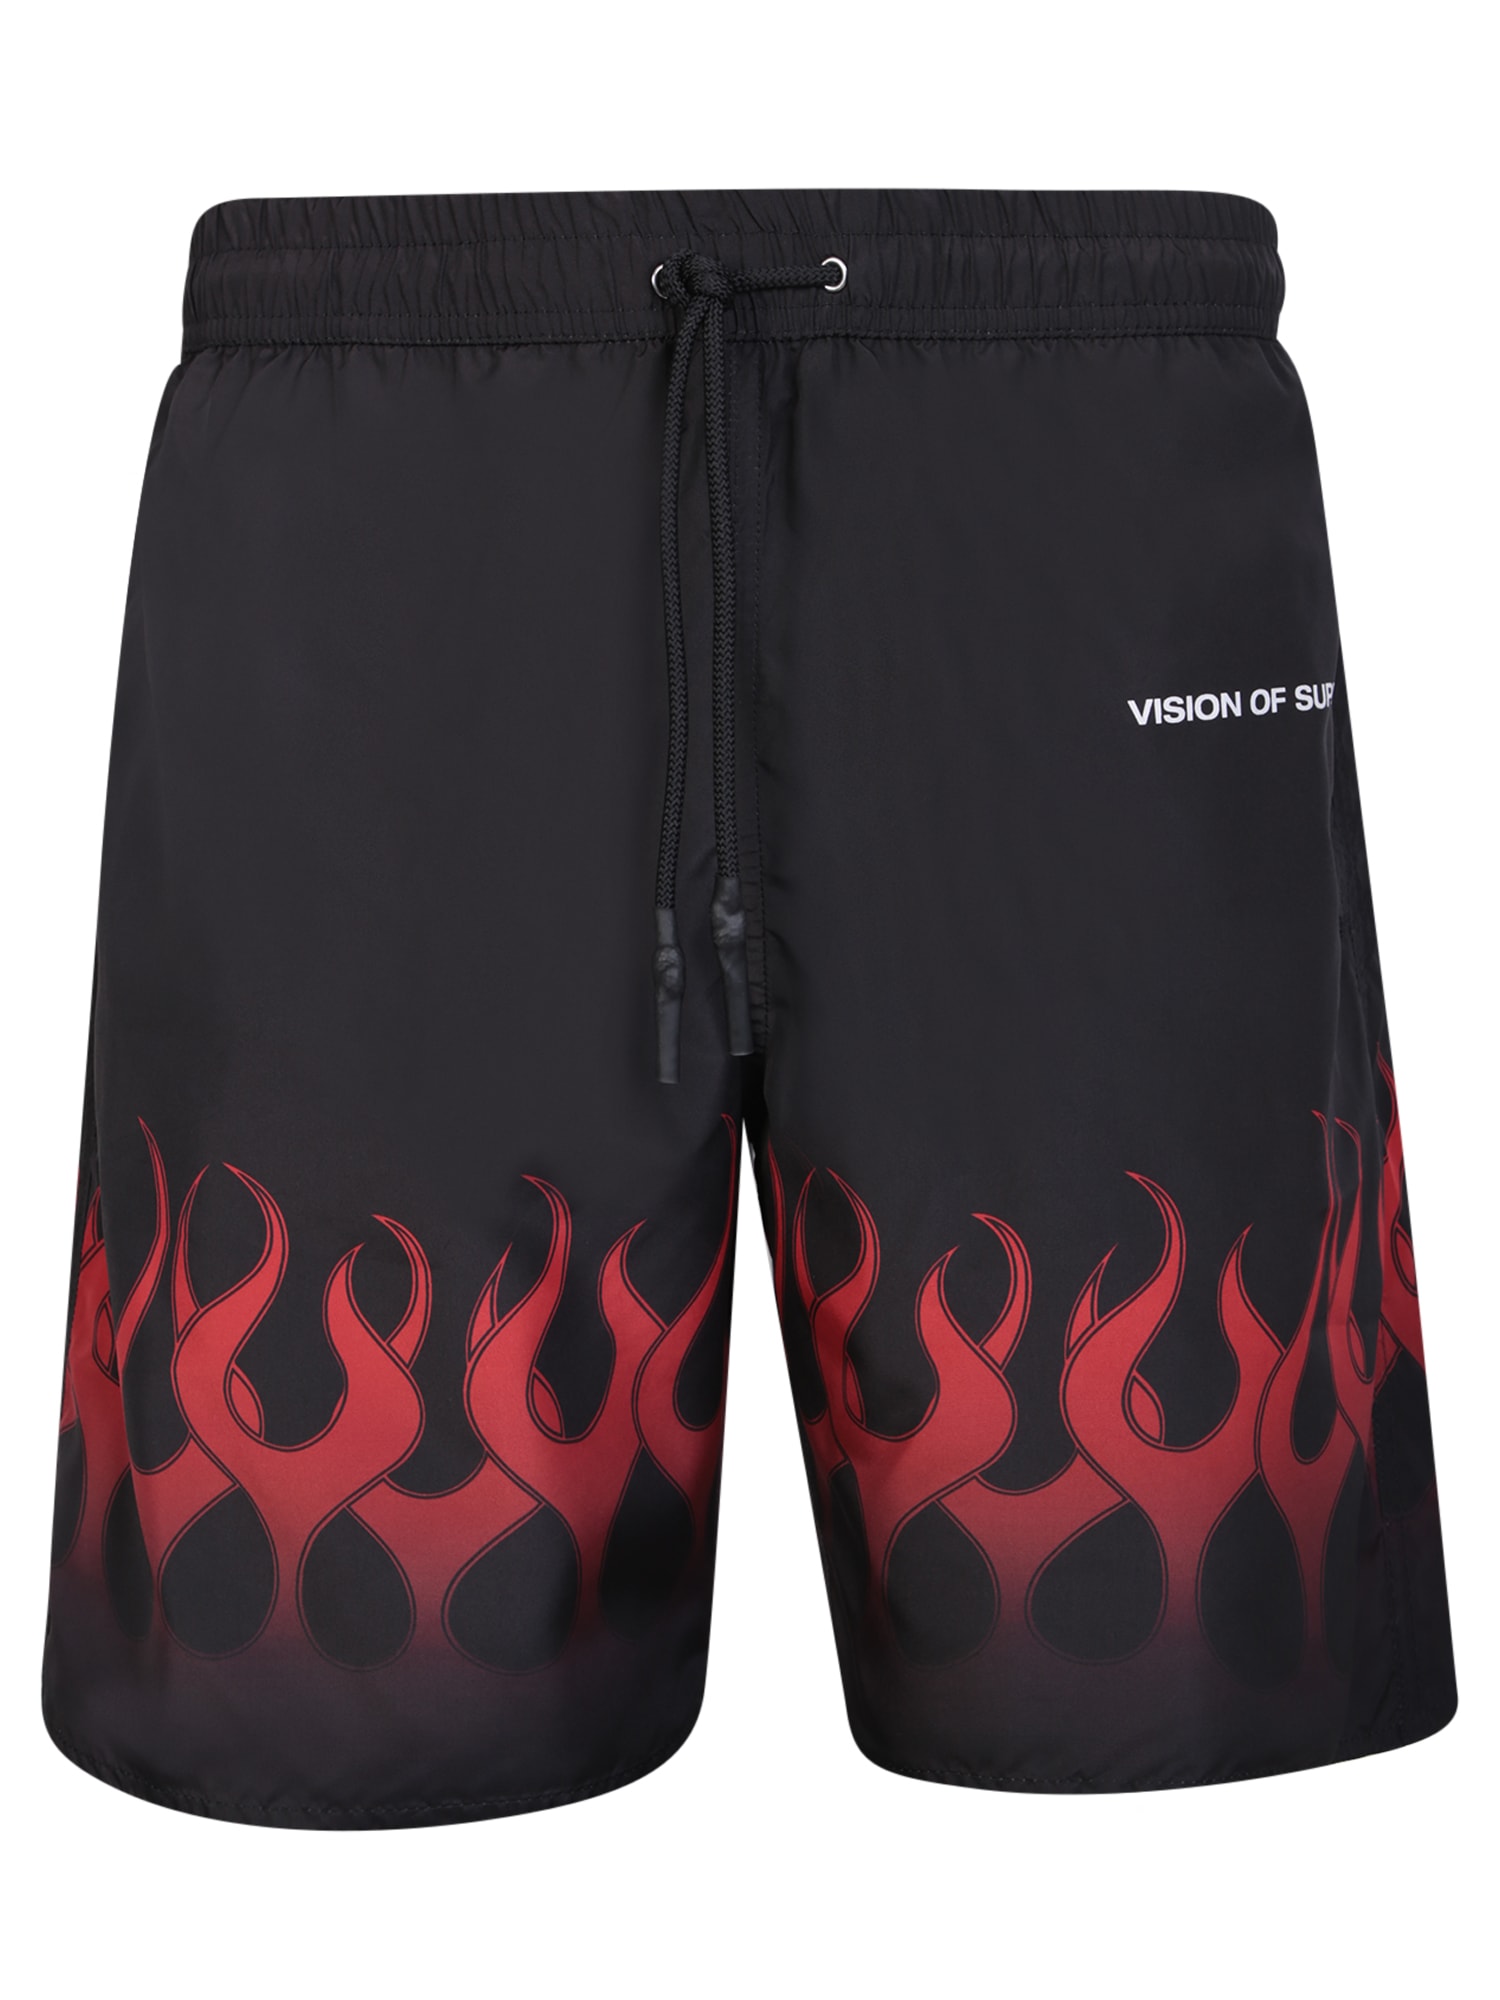 Vision of Super Black/red Flames Swim Shorts